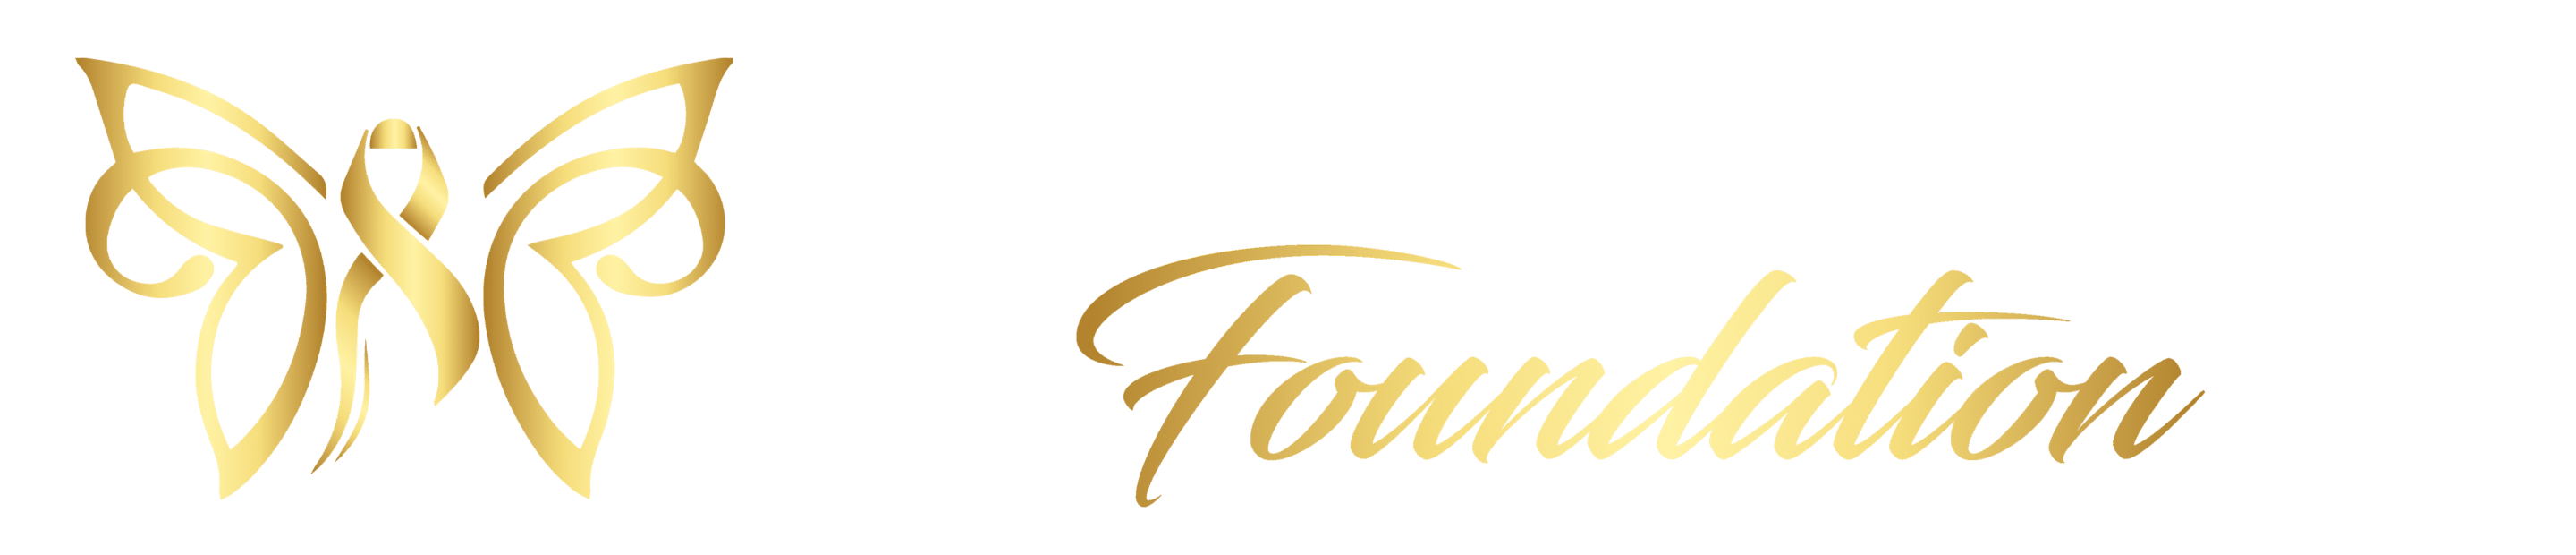 Made Stronger Foundation-logo